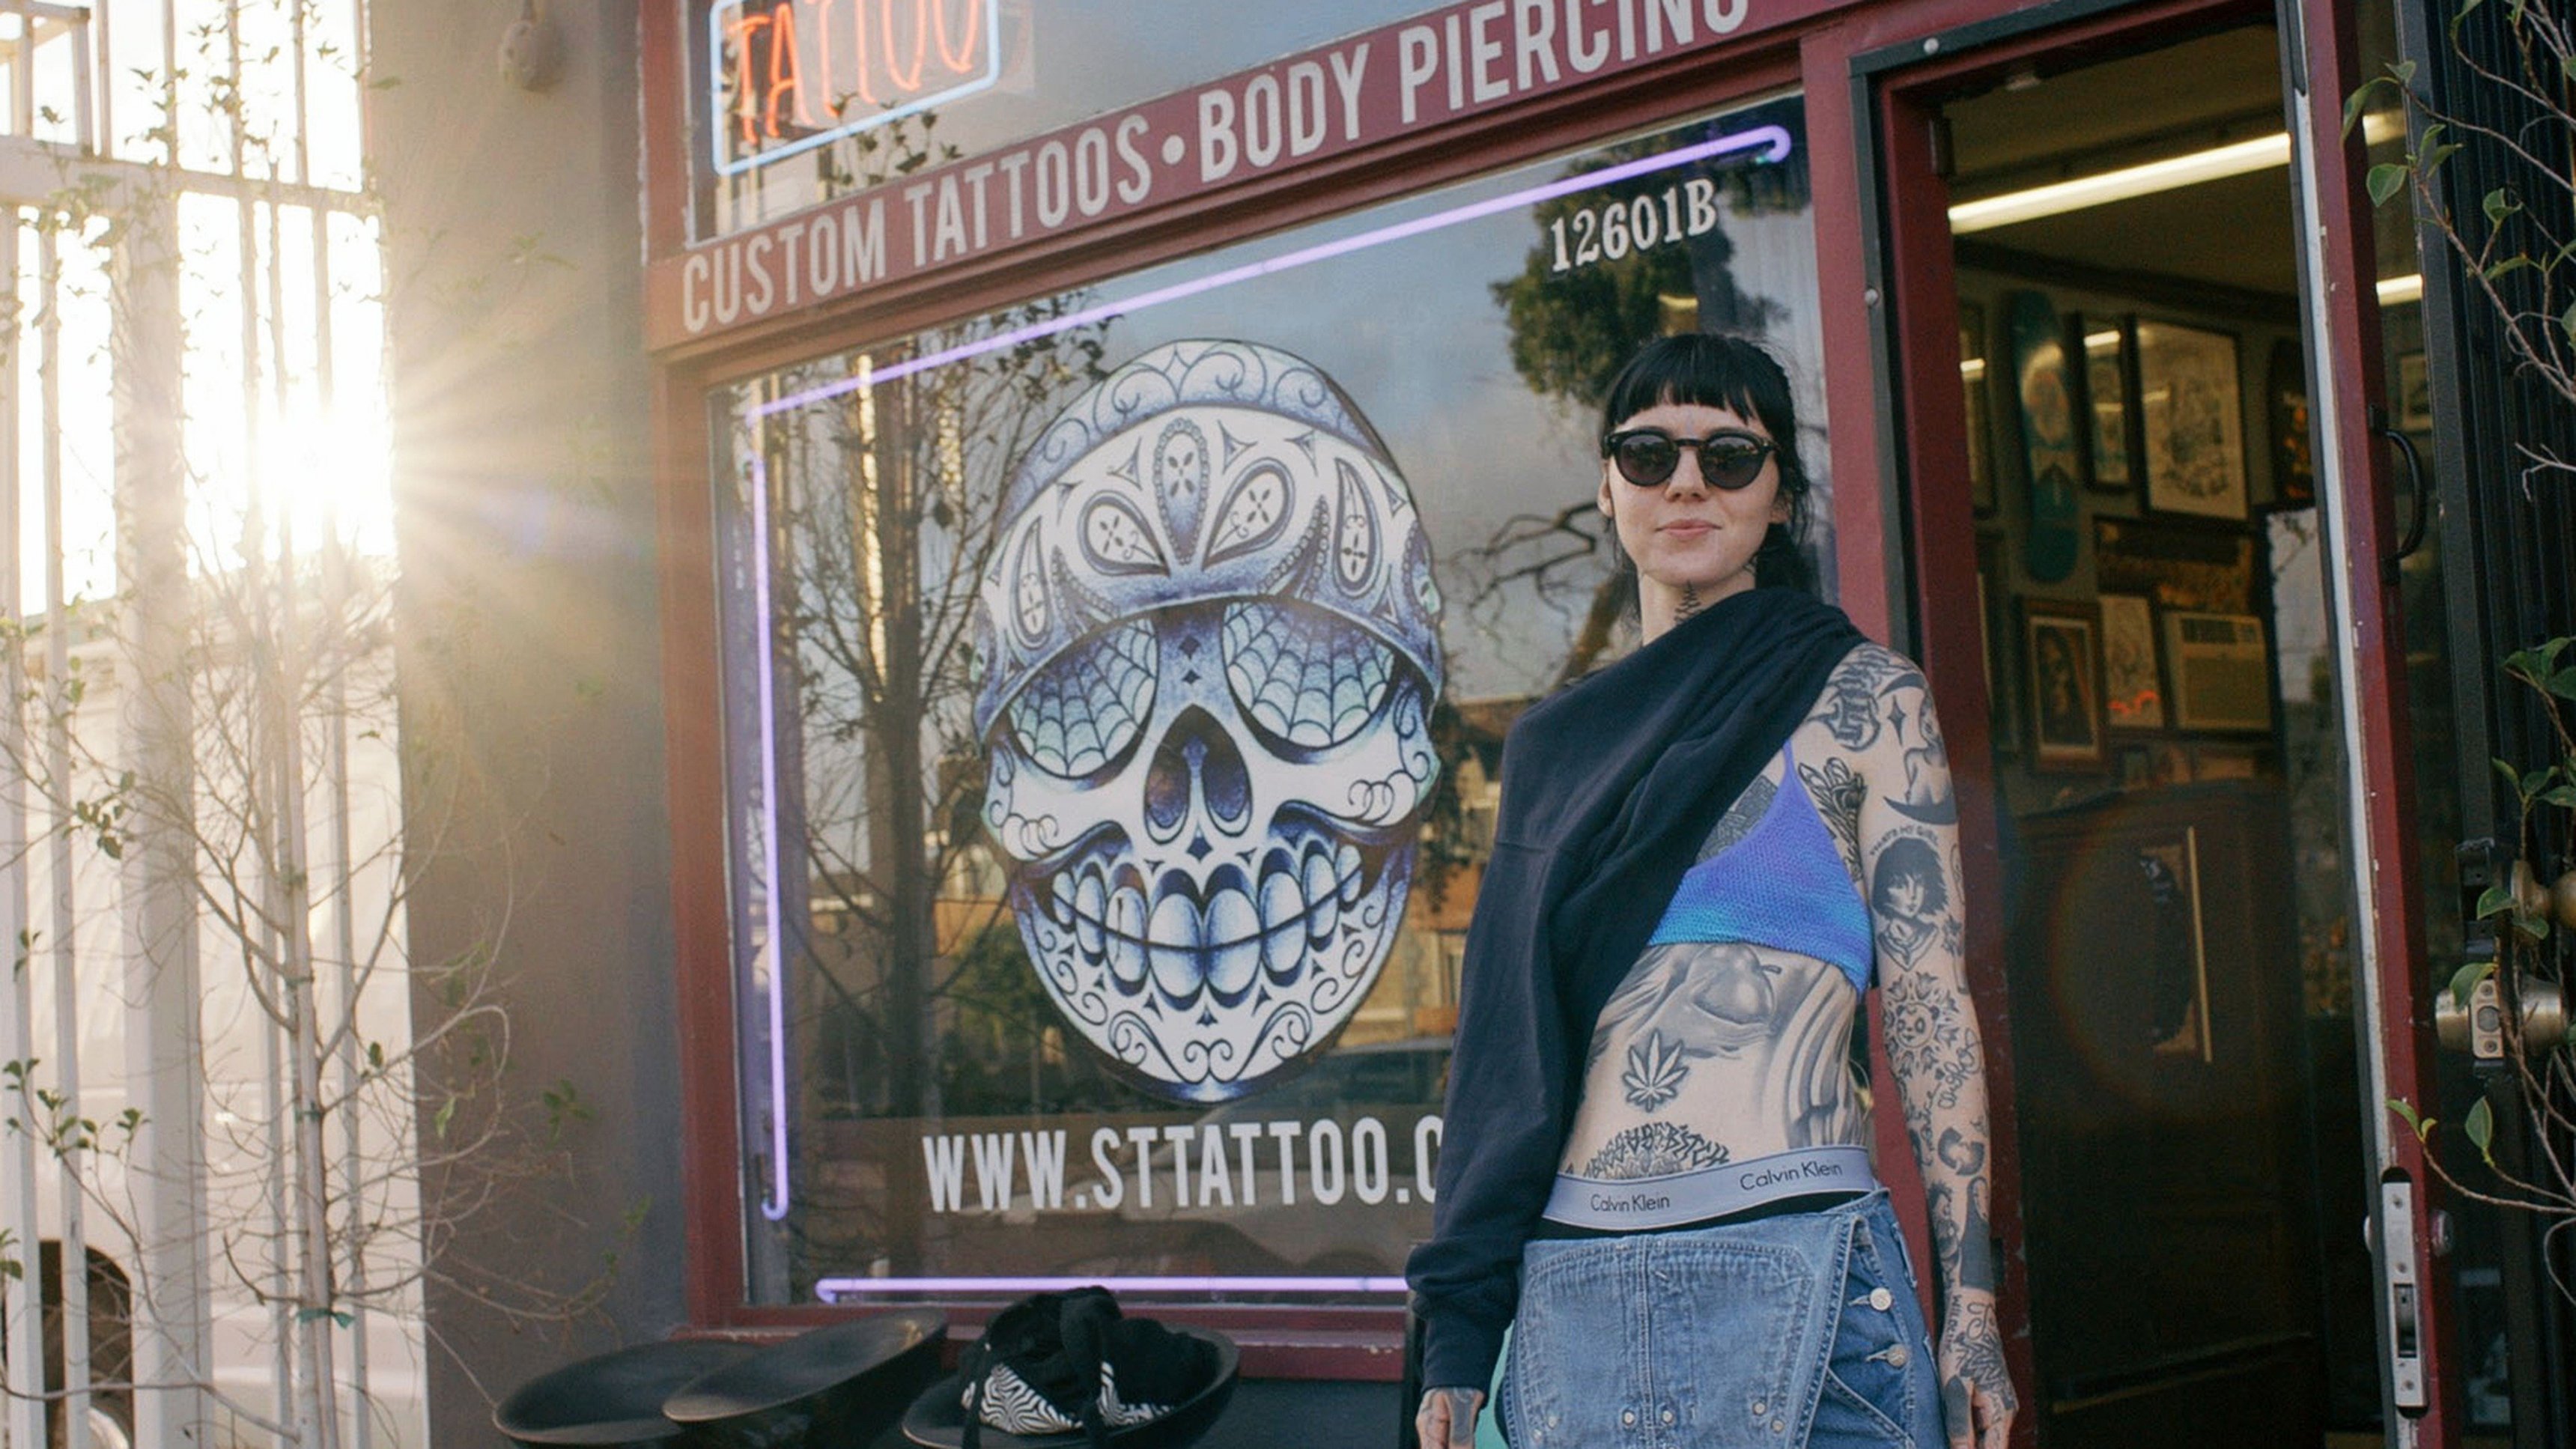 3. Gang Tattoos in LA